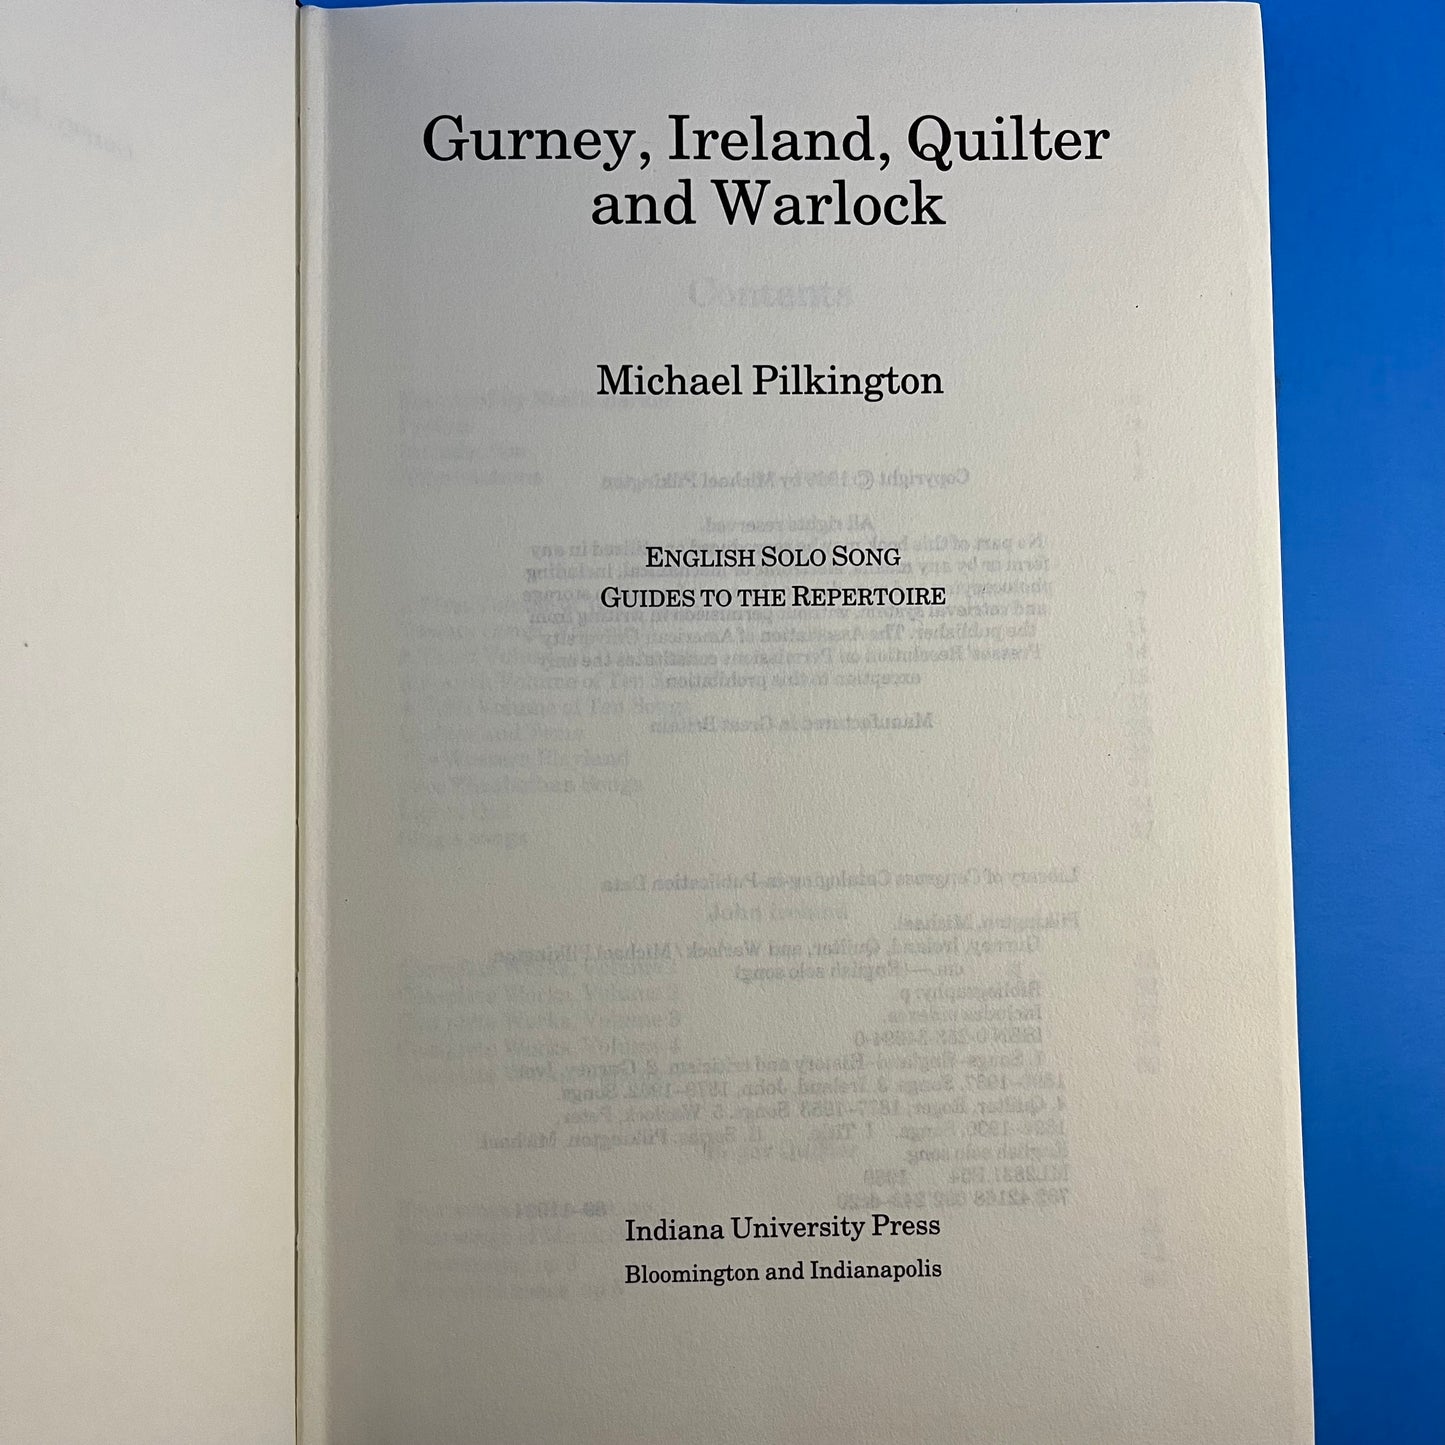 Gurney, Ireland, Quilter and Warlock